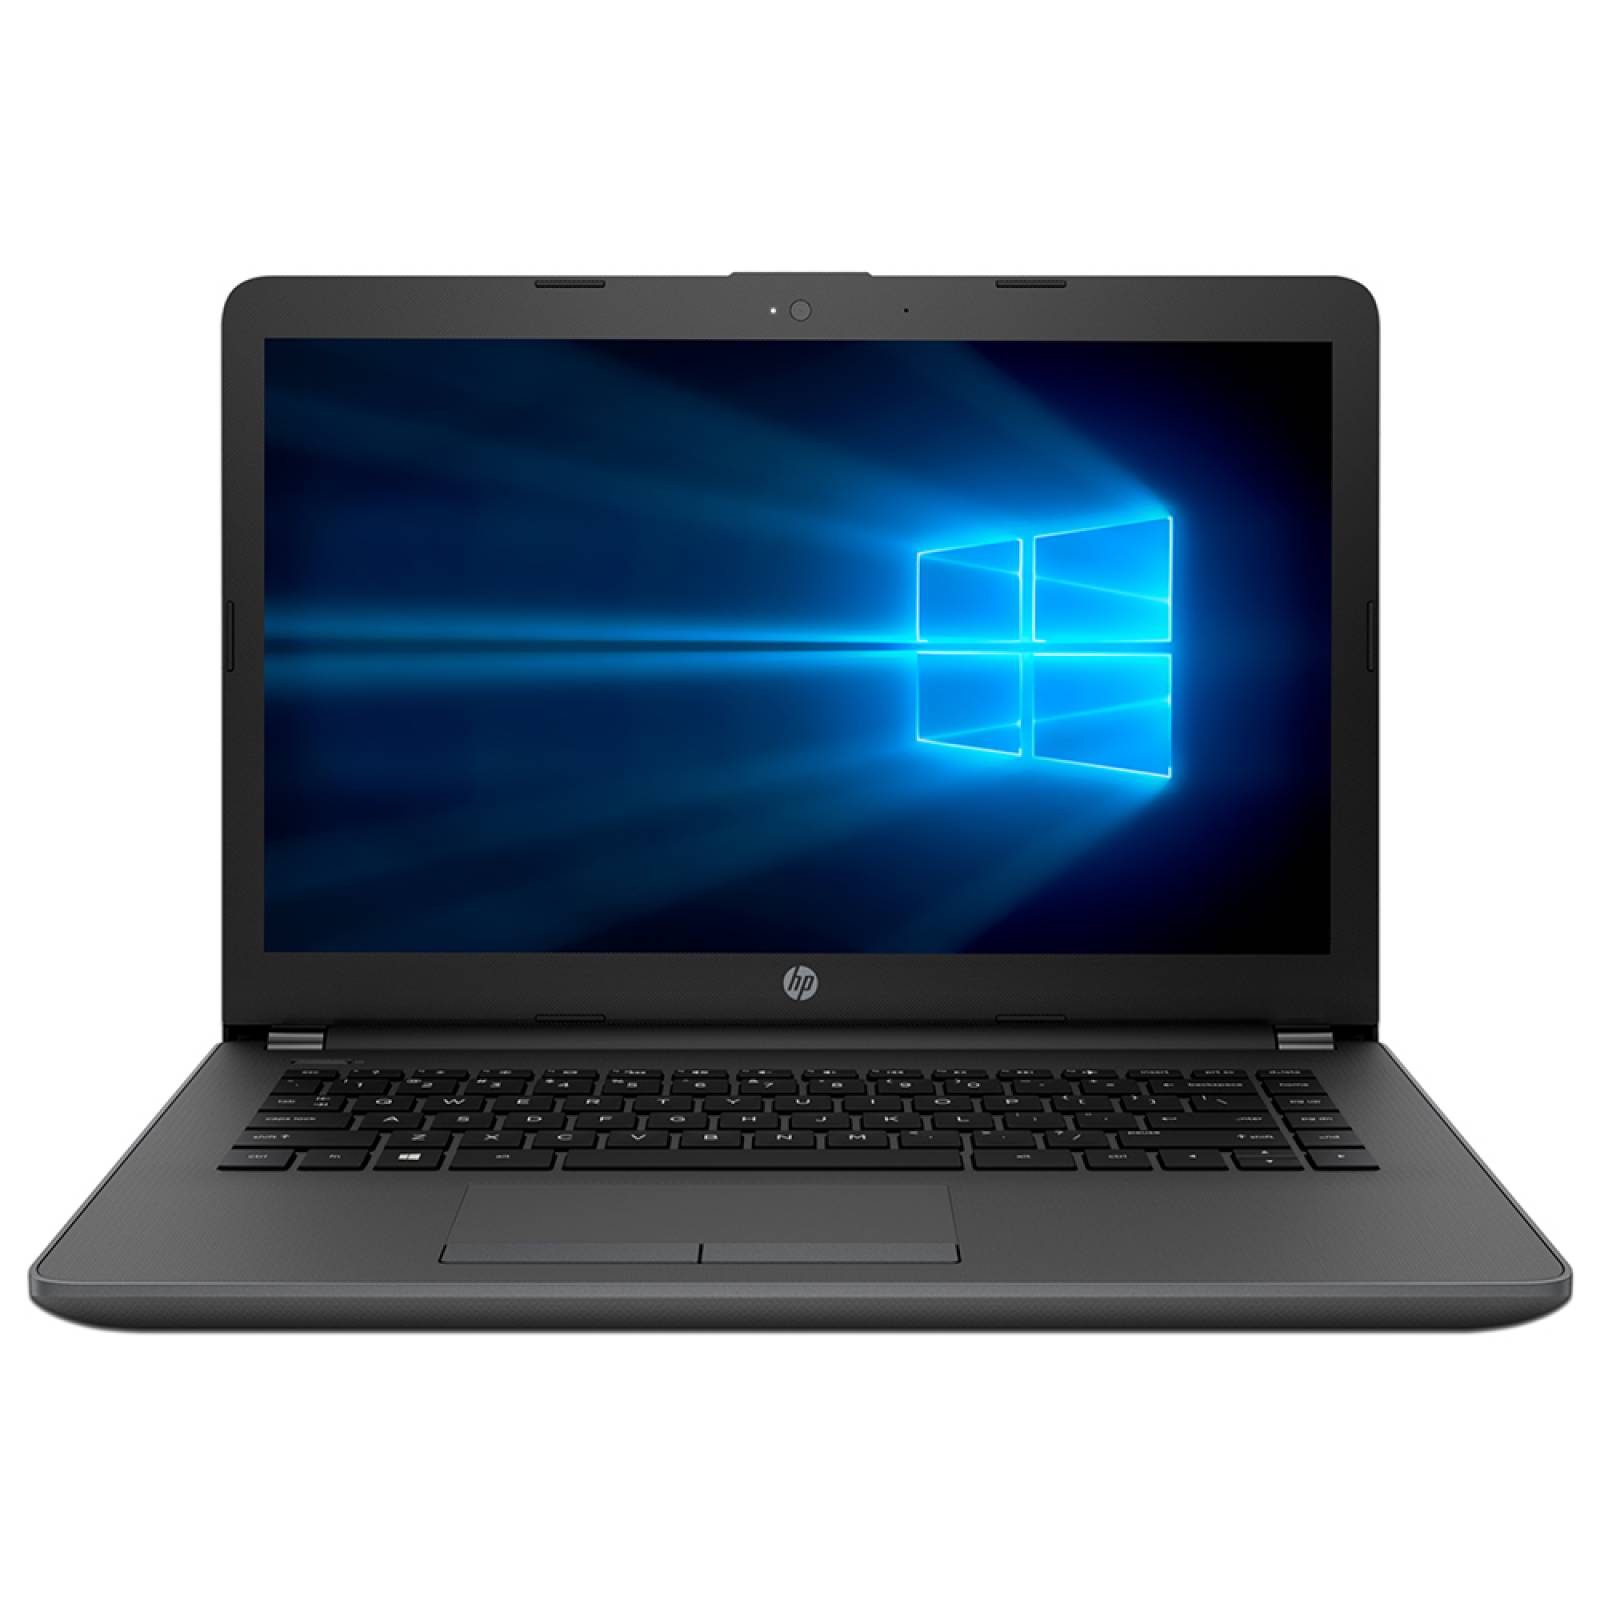 Laptop HP 240 G7 Procesador Intel Celeron N 4000 Memoria de 4GB DDR4 Disco Duro de 500GB Pantalla de 14 pulgadas LED Video UHD Graphics 600 S.O. Windows 10 Home